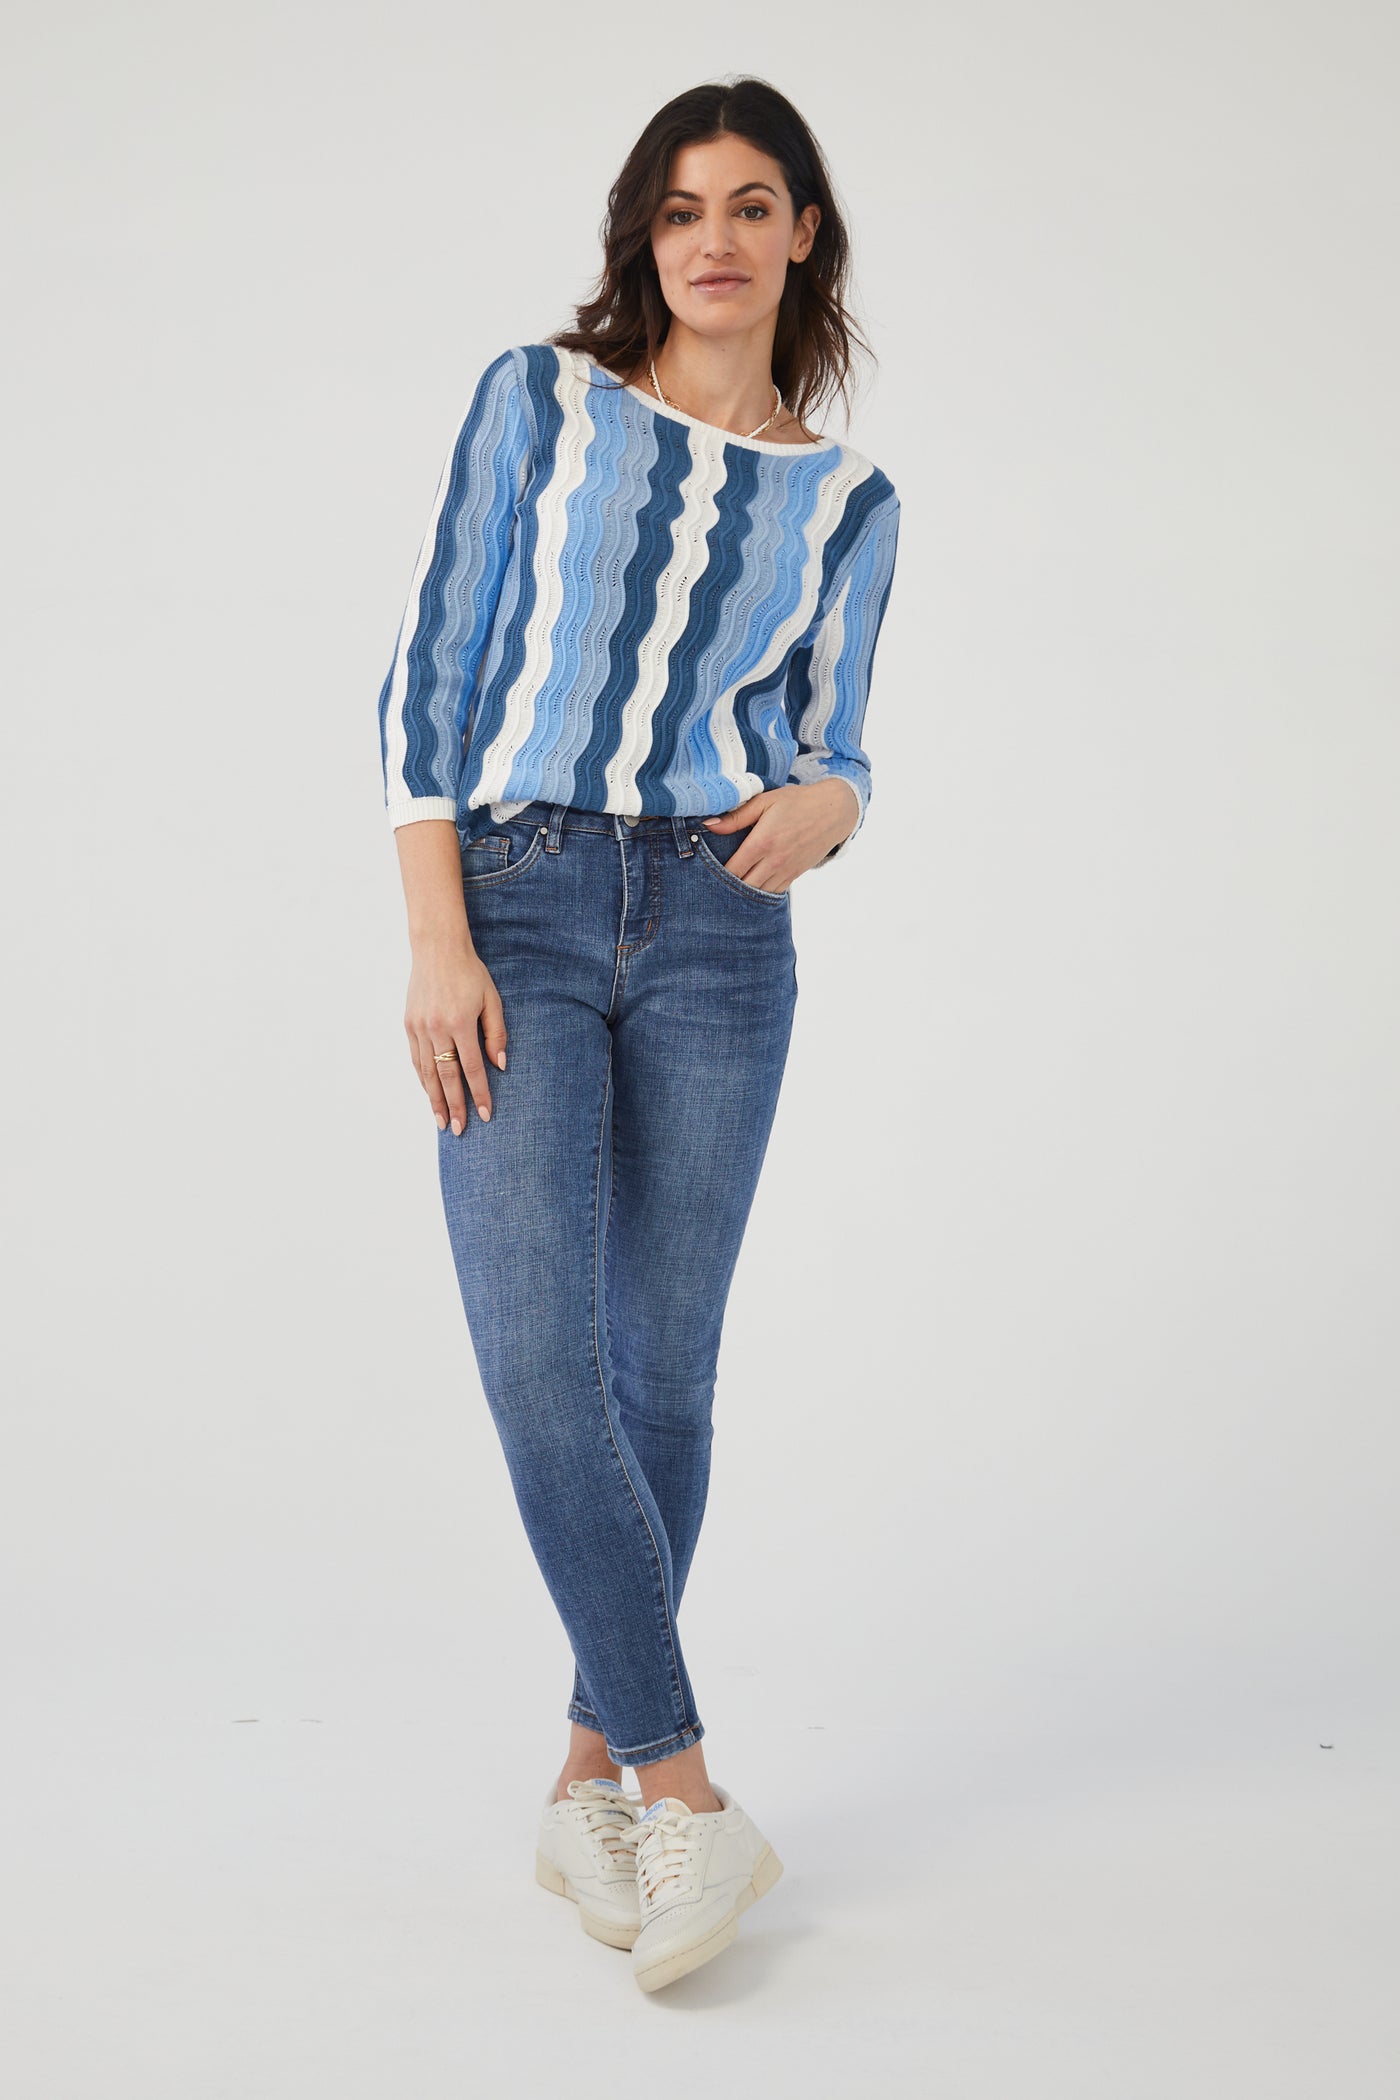 French Dressing Jeans Olivia Slim Ankle, Crosshatch Denim, Mid Rise 